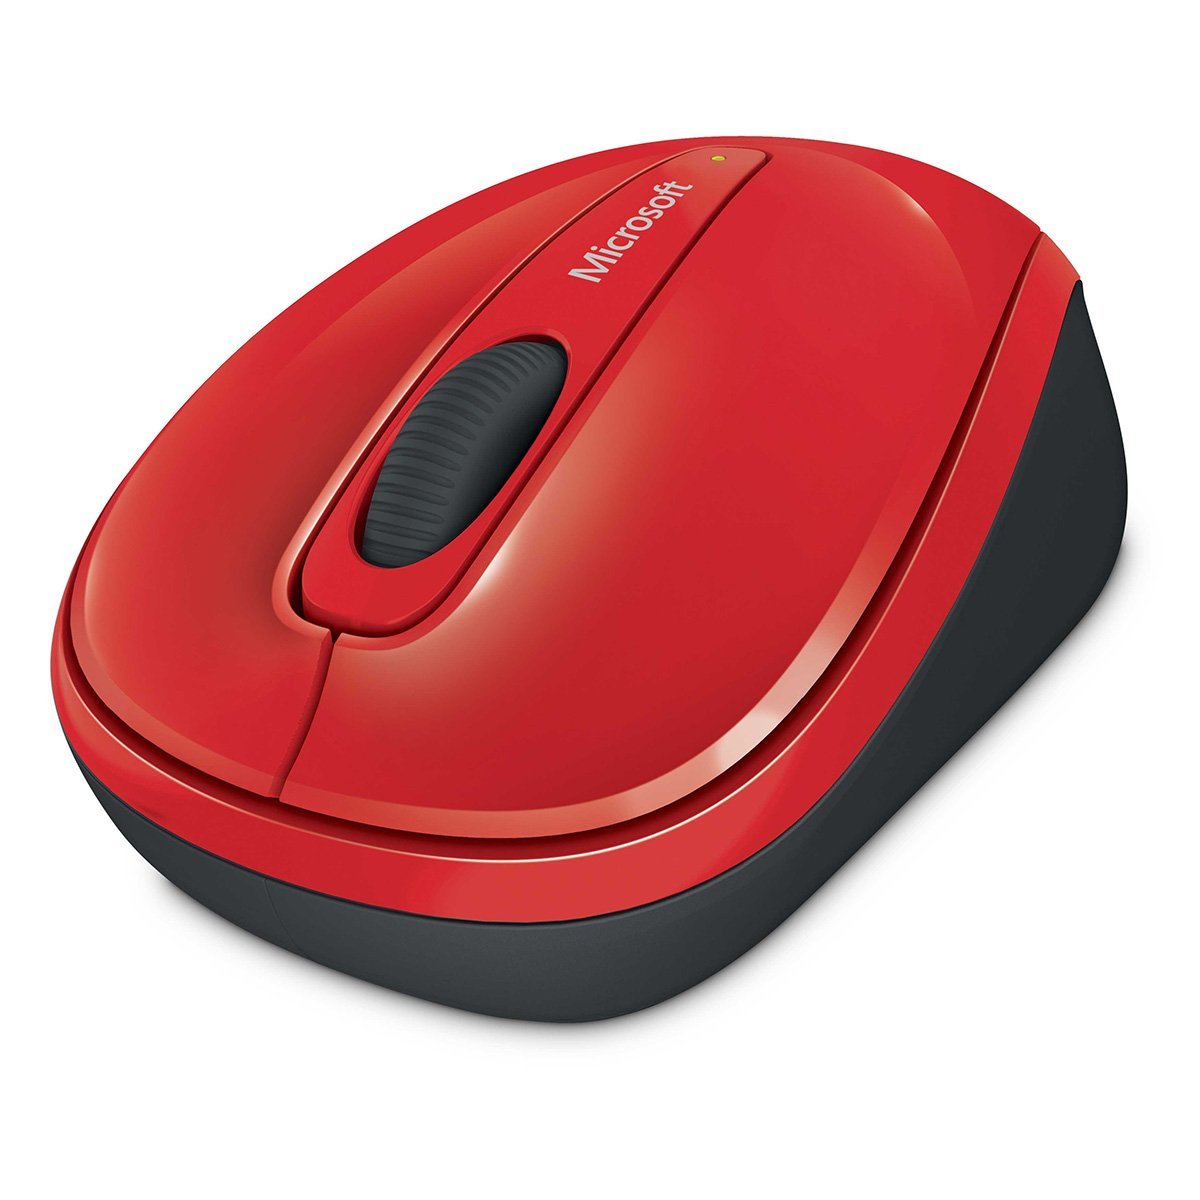 Microsoft Wireless Mobile Mouse3500 Mac/Win EG EN/DA/NL/FI/FR/DE/NO/SV/TR Flame Datora pele